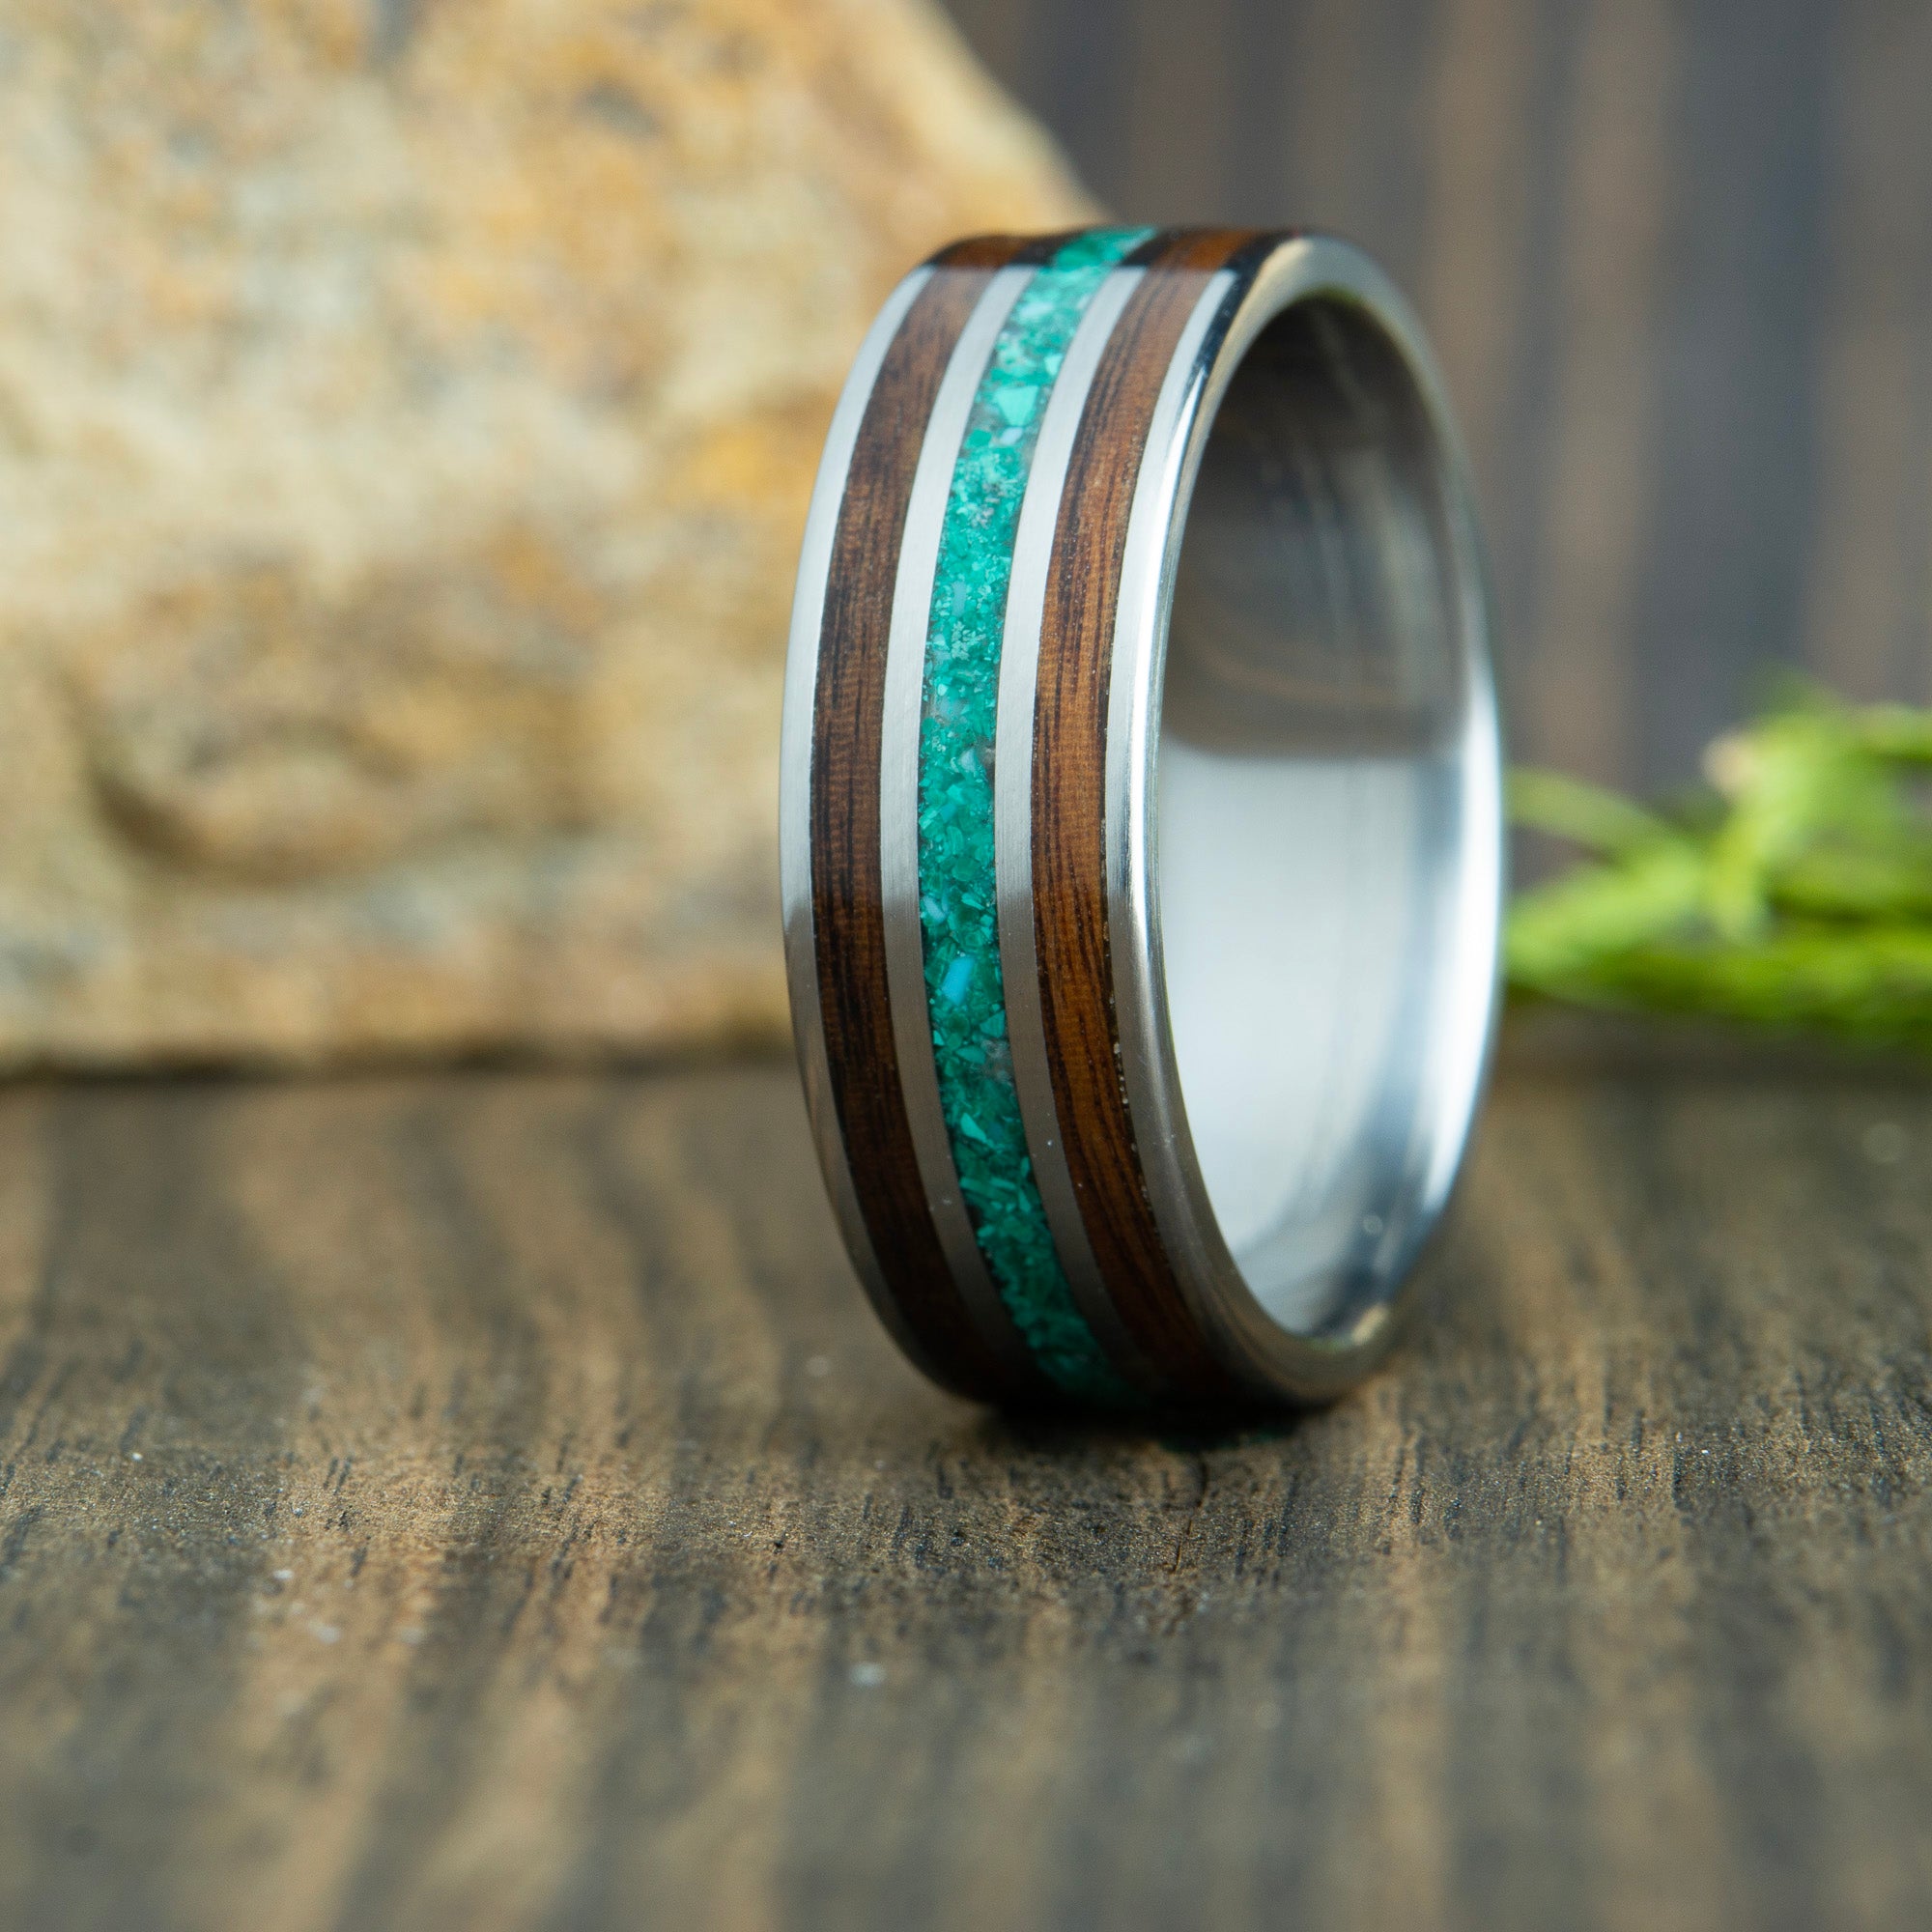 Titanium with Malachite Stone and Rosewood Inlays Wedding Ring